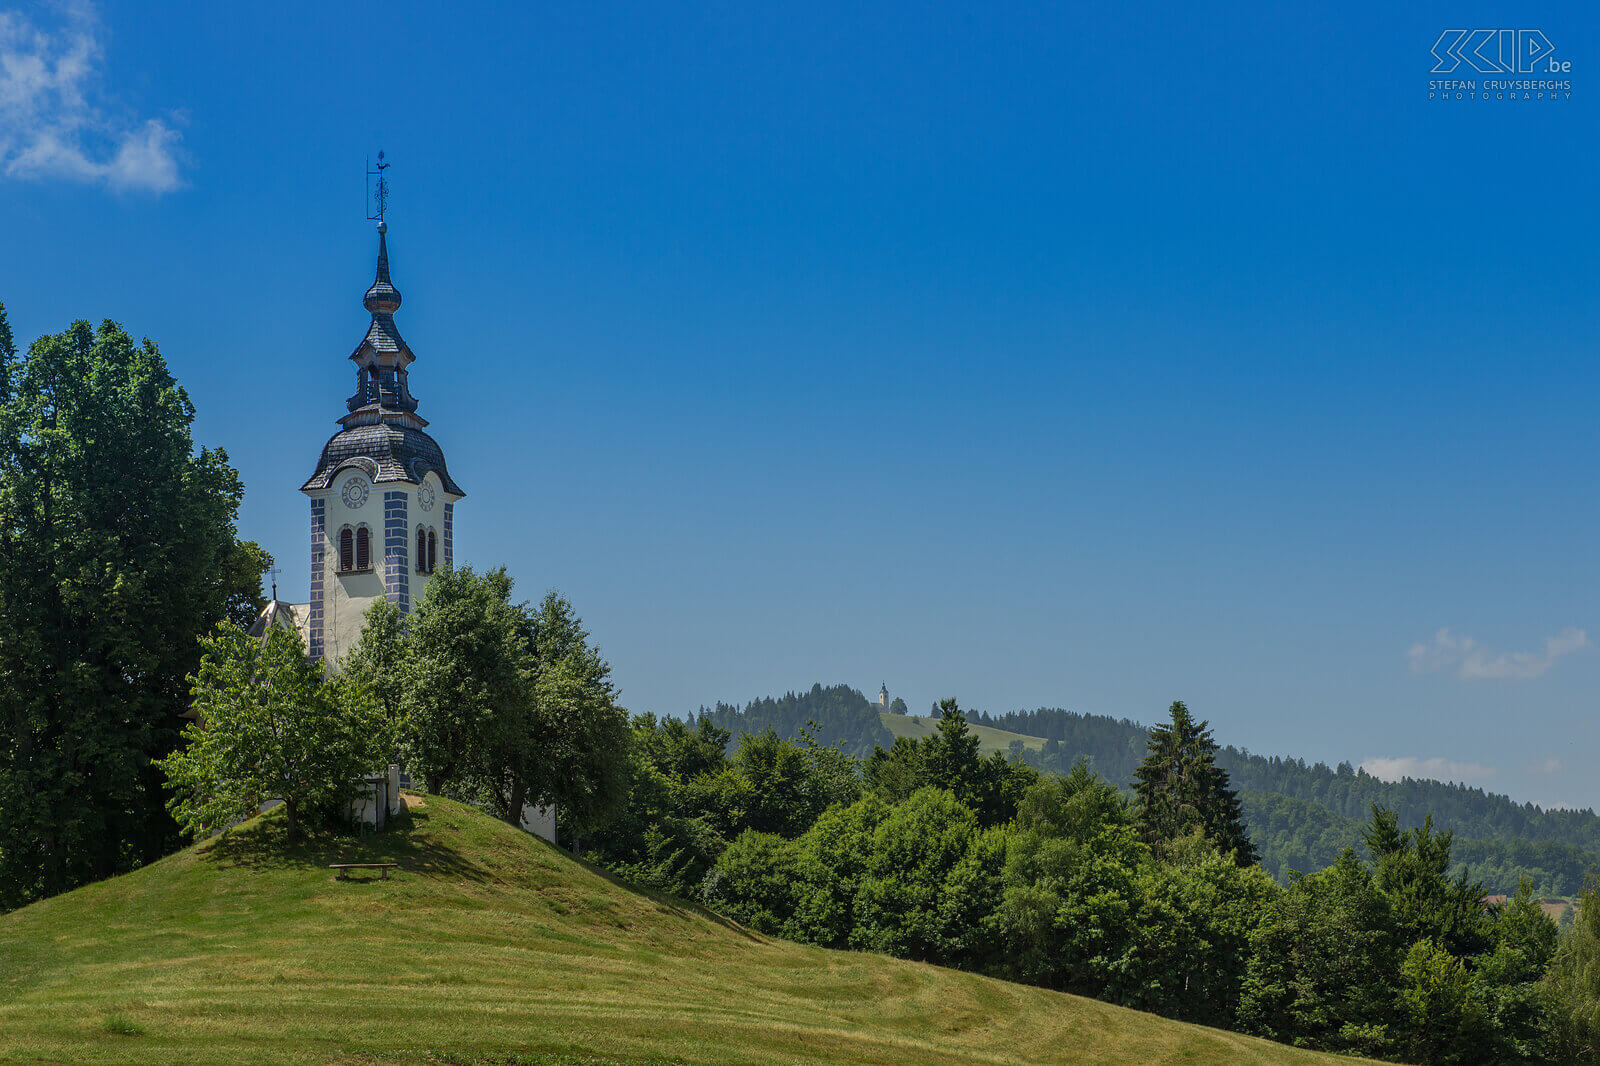 Skofja Loka - Church In Slovenia there are very many beautiful little churches on the hill tops. This is a Sv. Andrej church near Skofja Loka. Stefan Cruysberghs